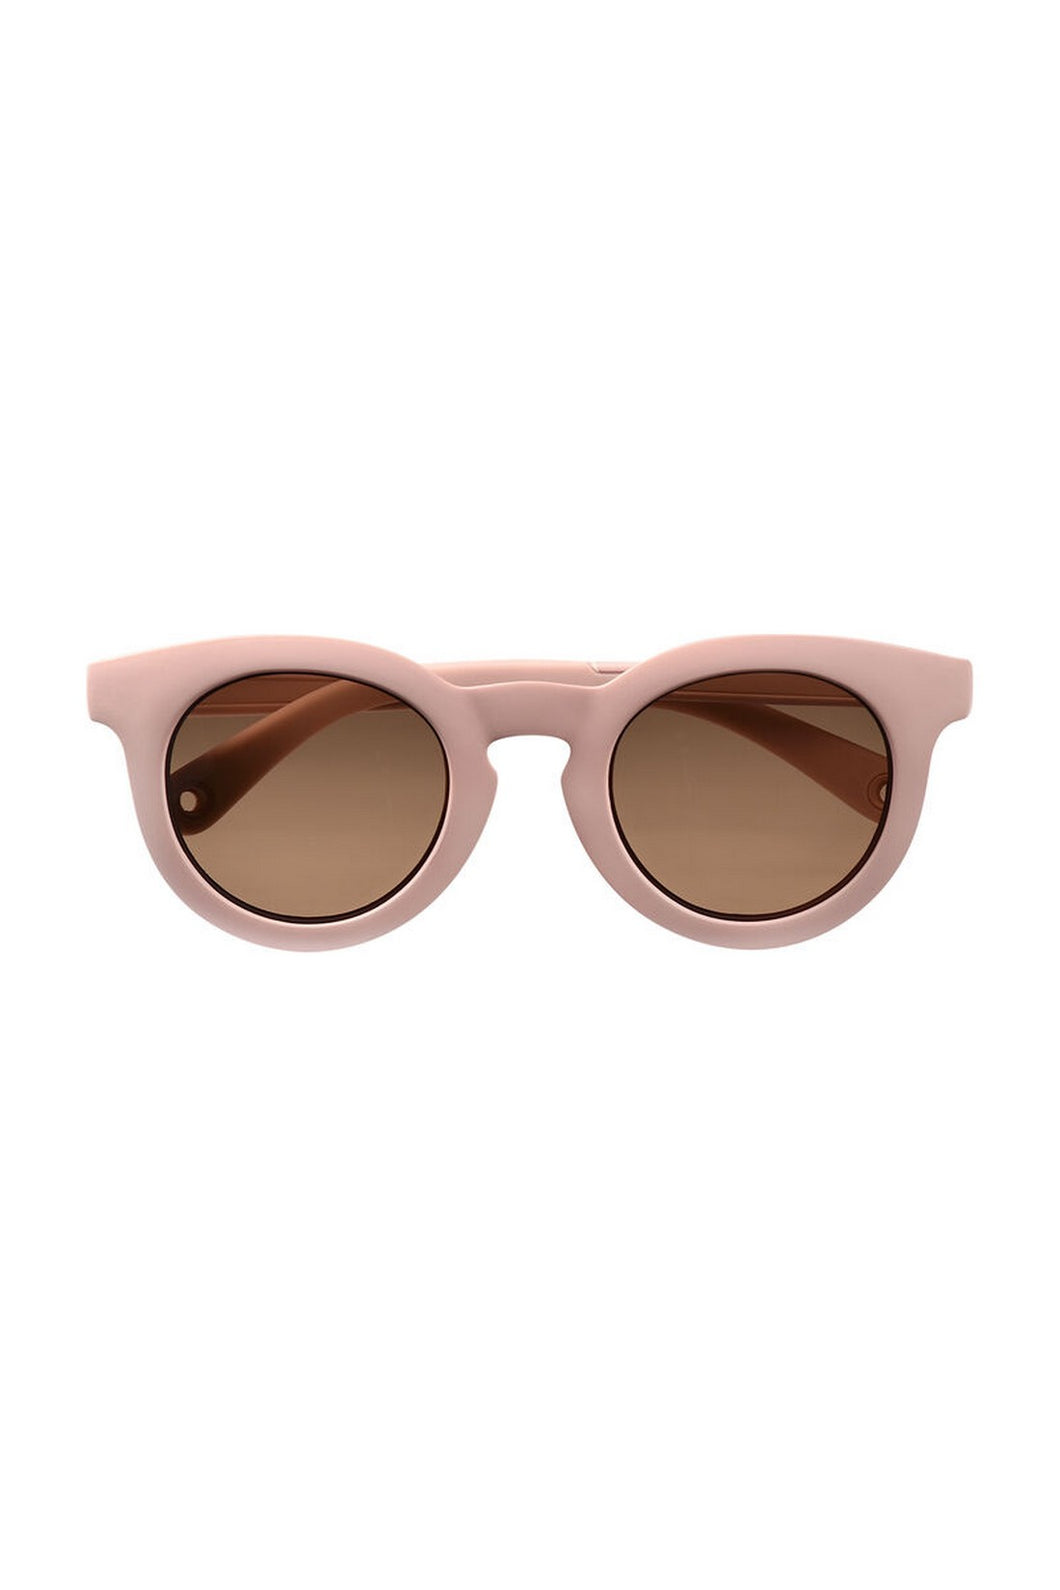 Beaba Sunglasses 2-4YR - Dusty Rose 1